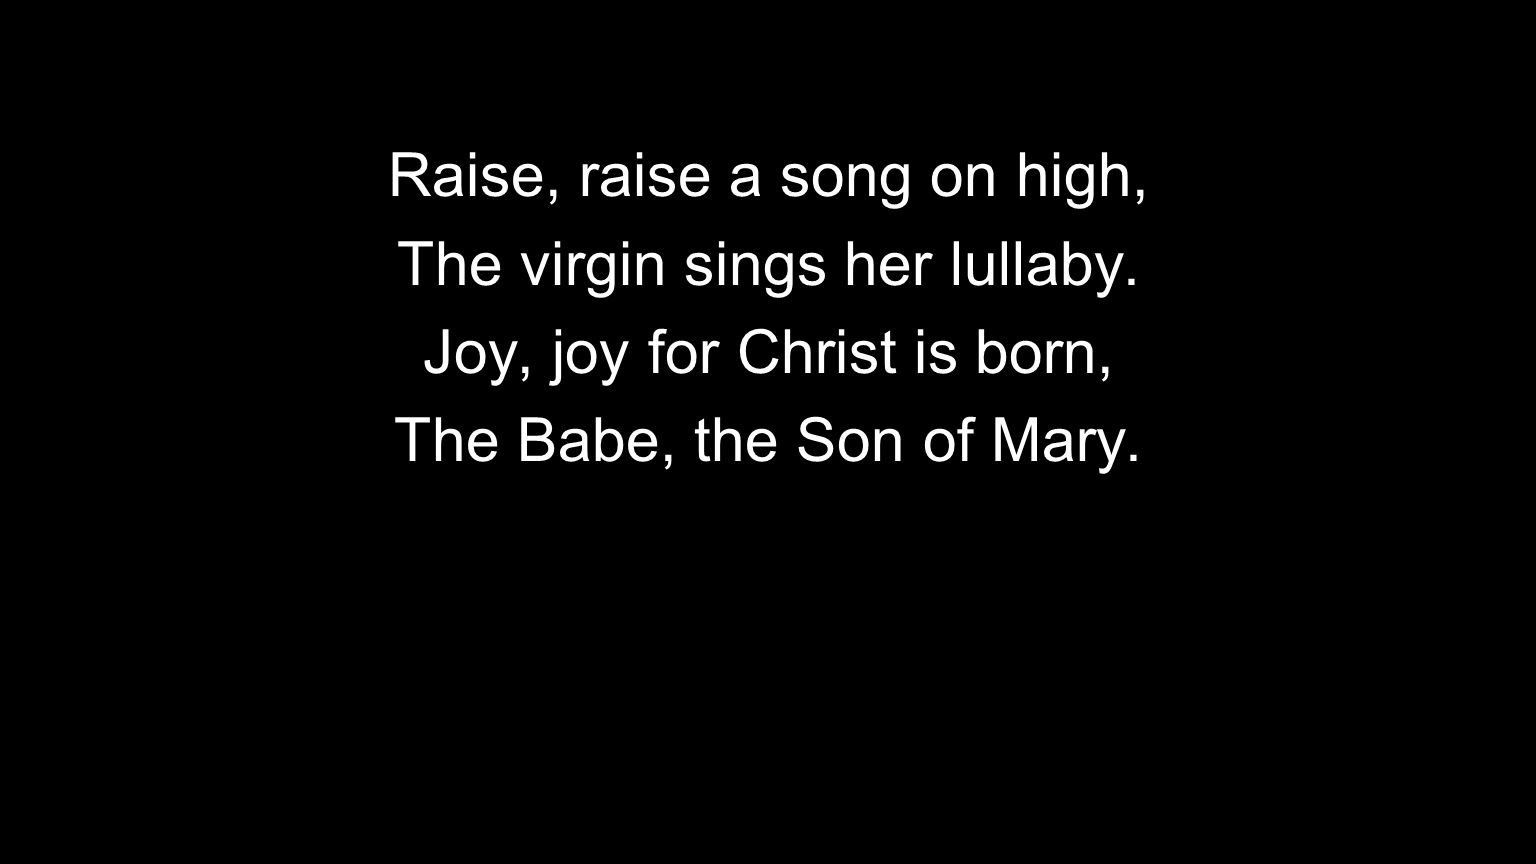 Raise, raise a song on high, The virgin sings her lullaby.